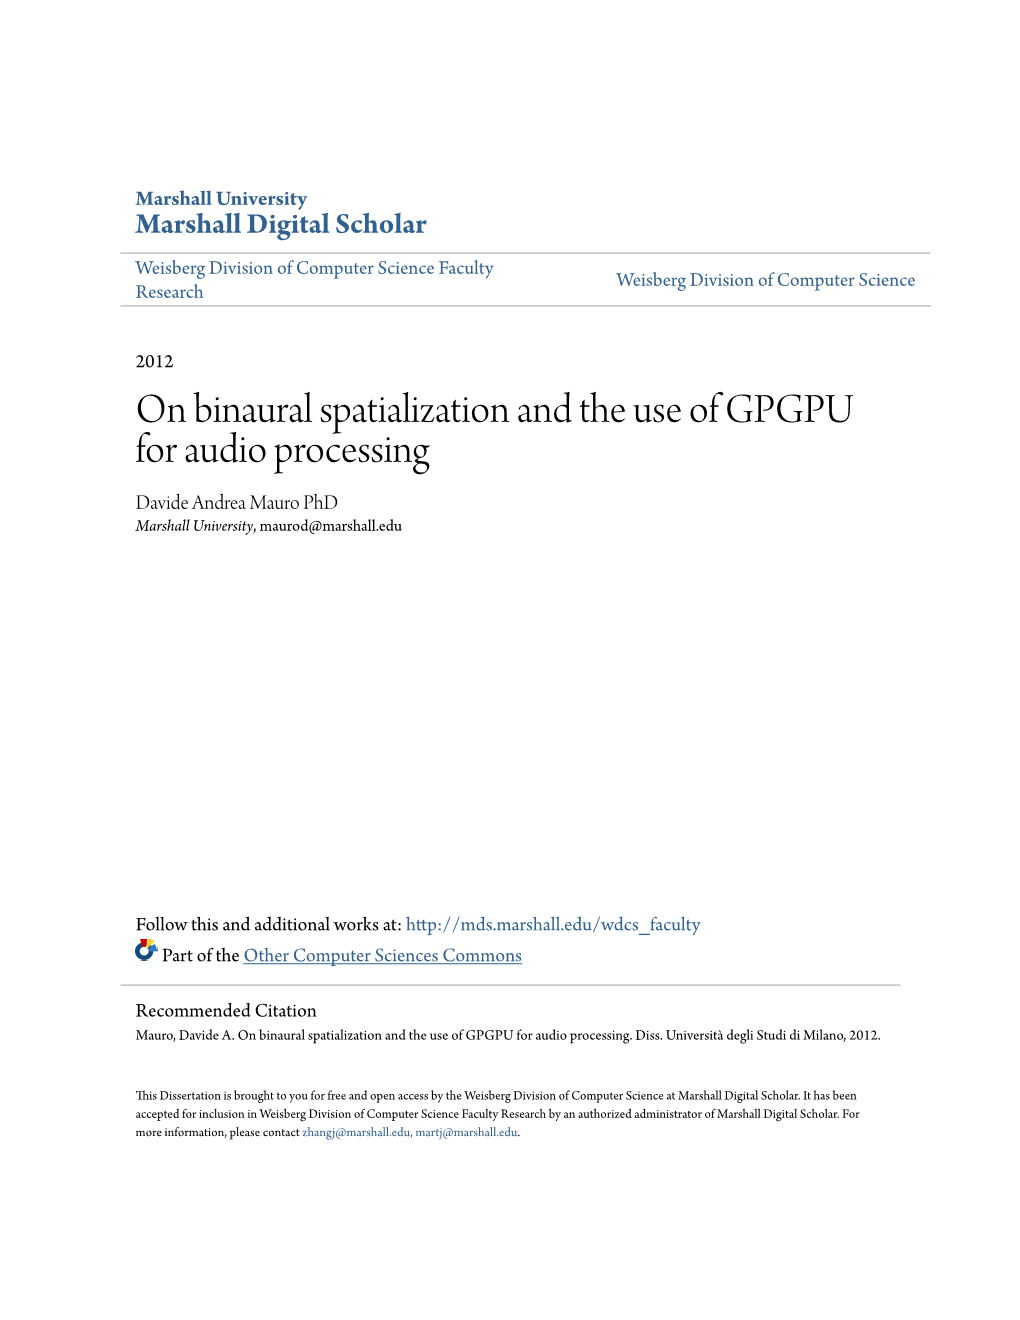 On Binaural Spatialization and the Use of GPGPU for Audio Processing Davide Andrea Mauro Phd Marshall University, Maurod@Marshall.Edu